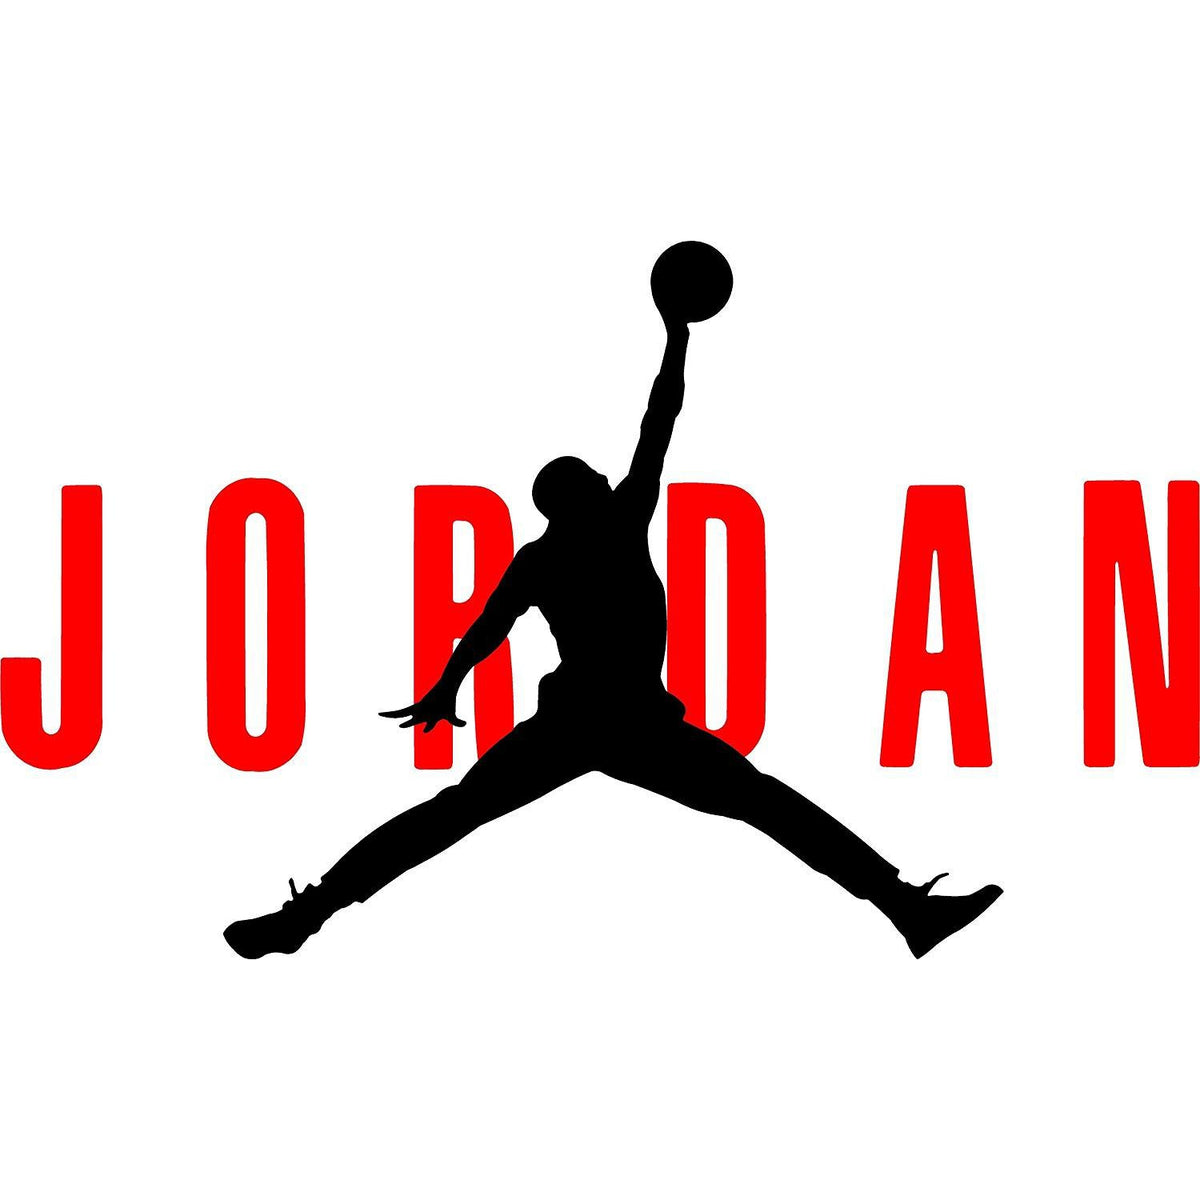 the jordan logo